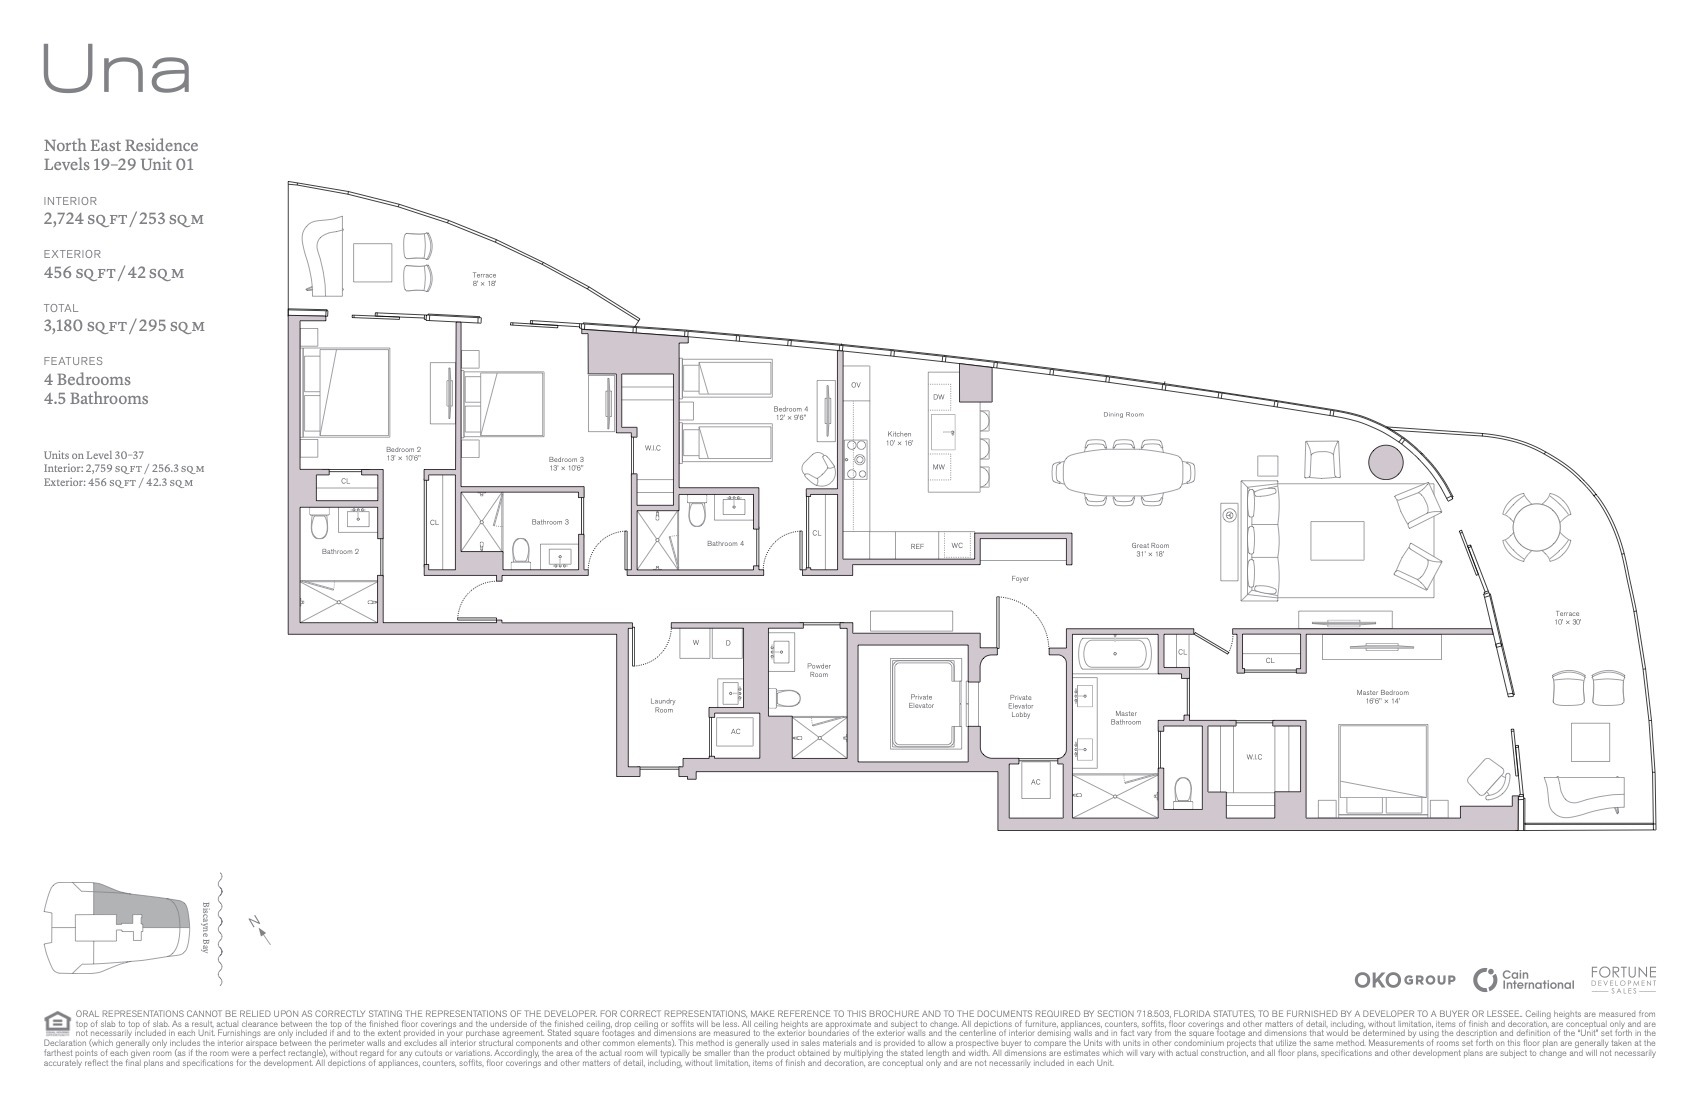 Floor Plan for Una Residences Floor Plans, NE 19-20 Unit 01